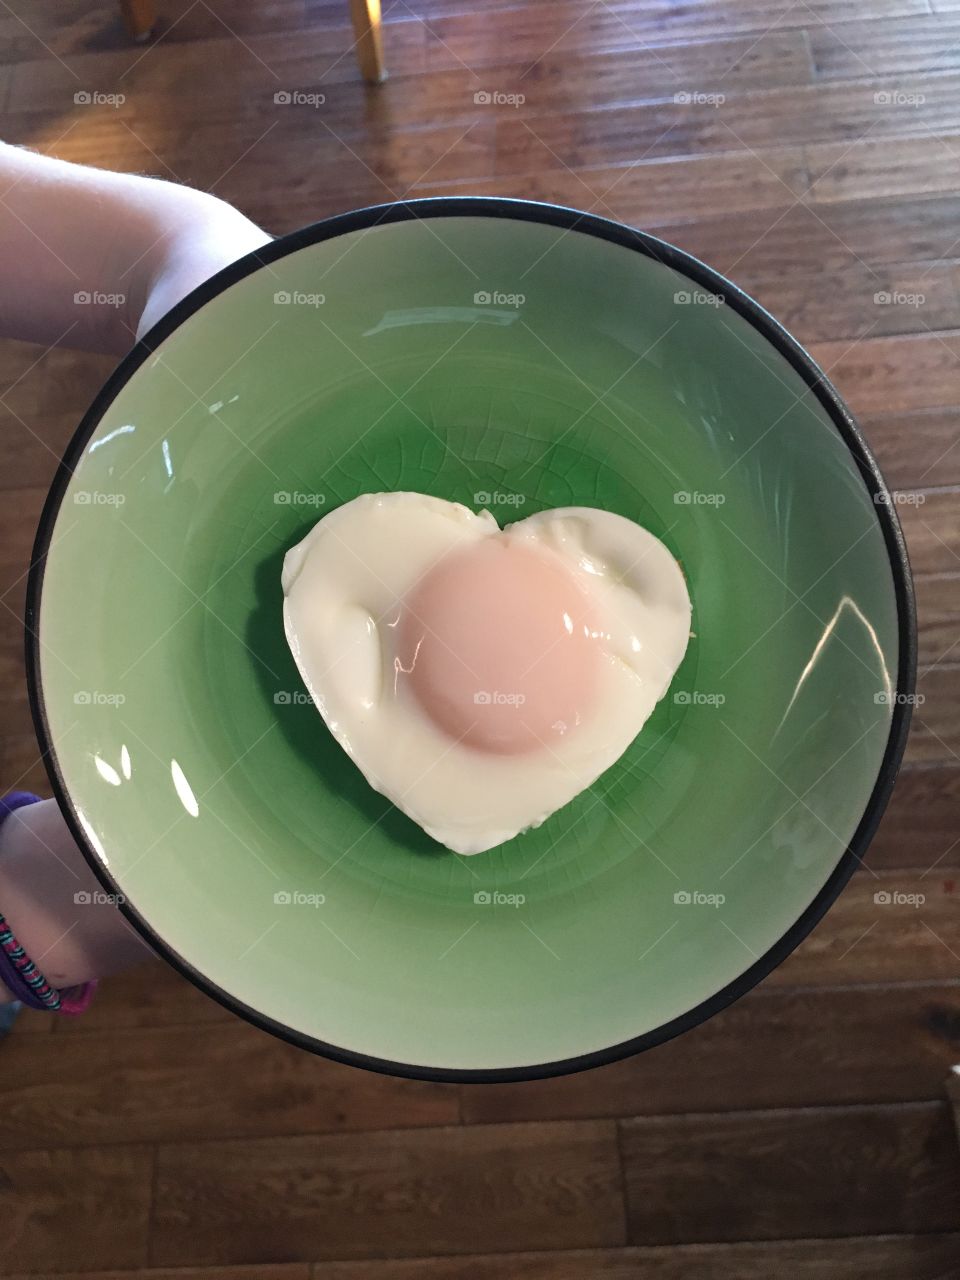 Love eggs